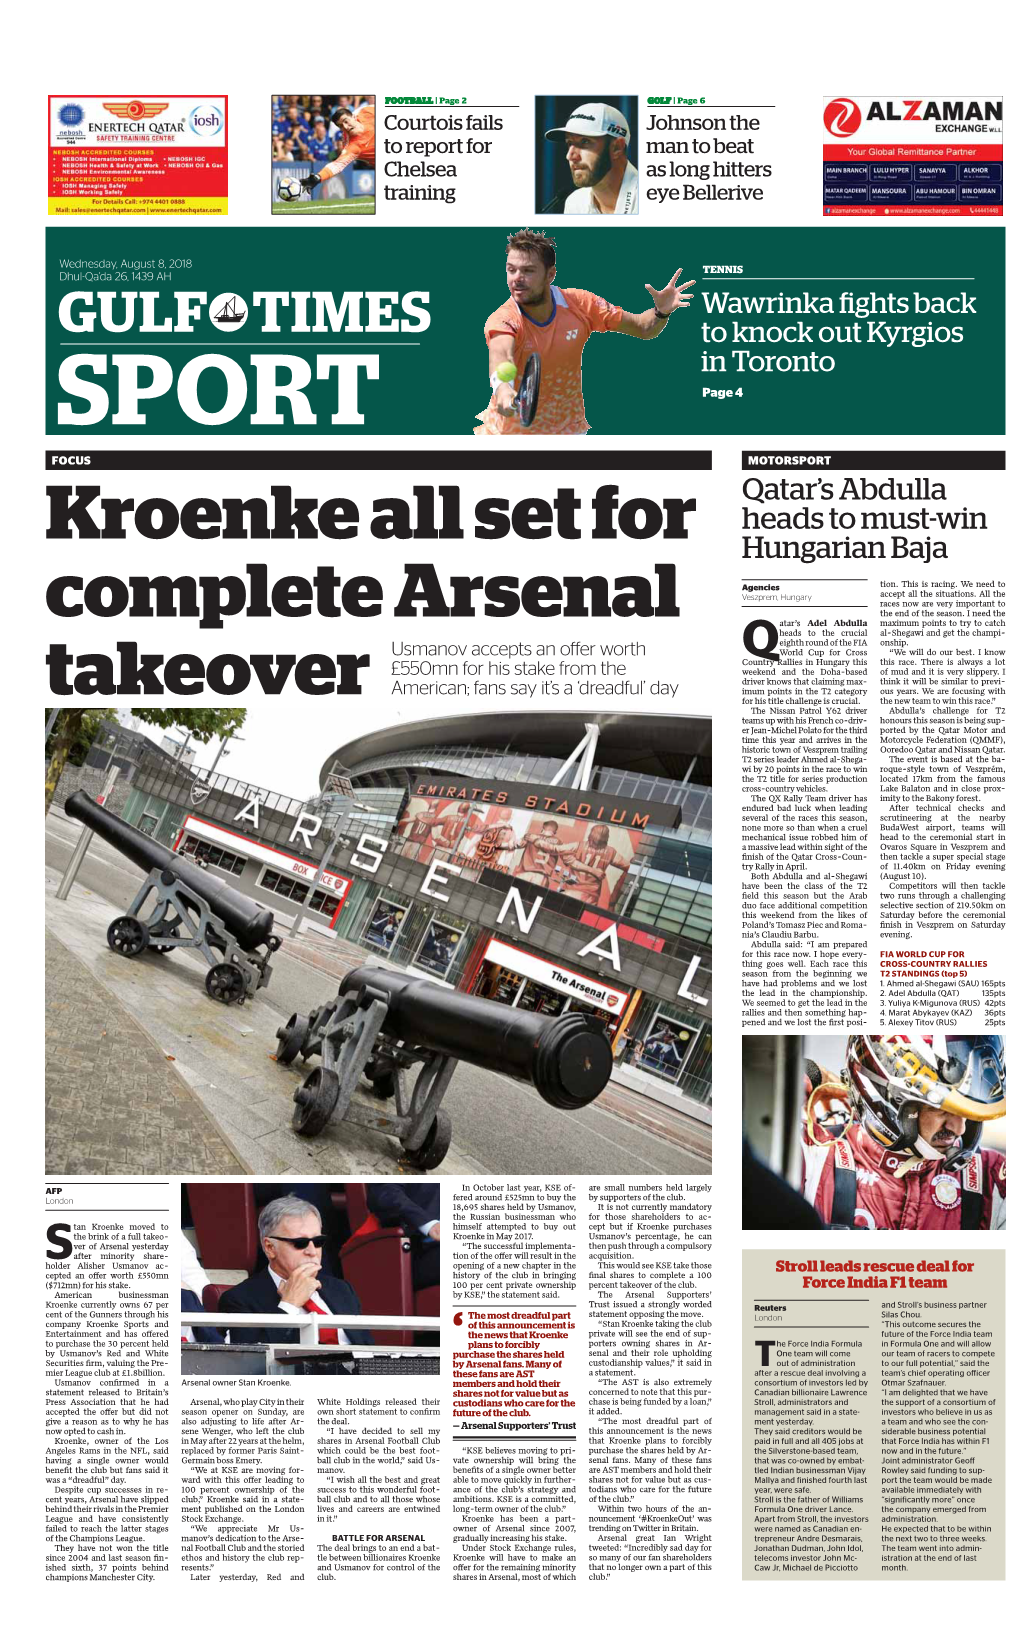 Kroenke's Sole Ownership of Arsenal Is Worrying